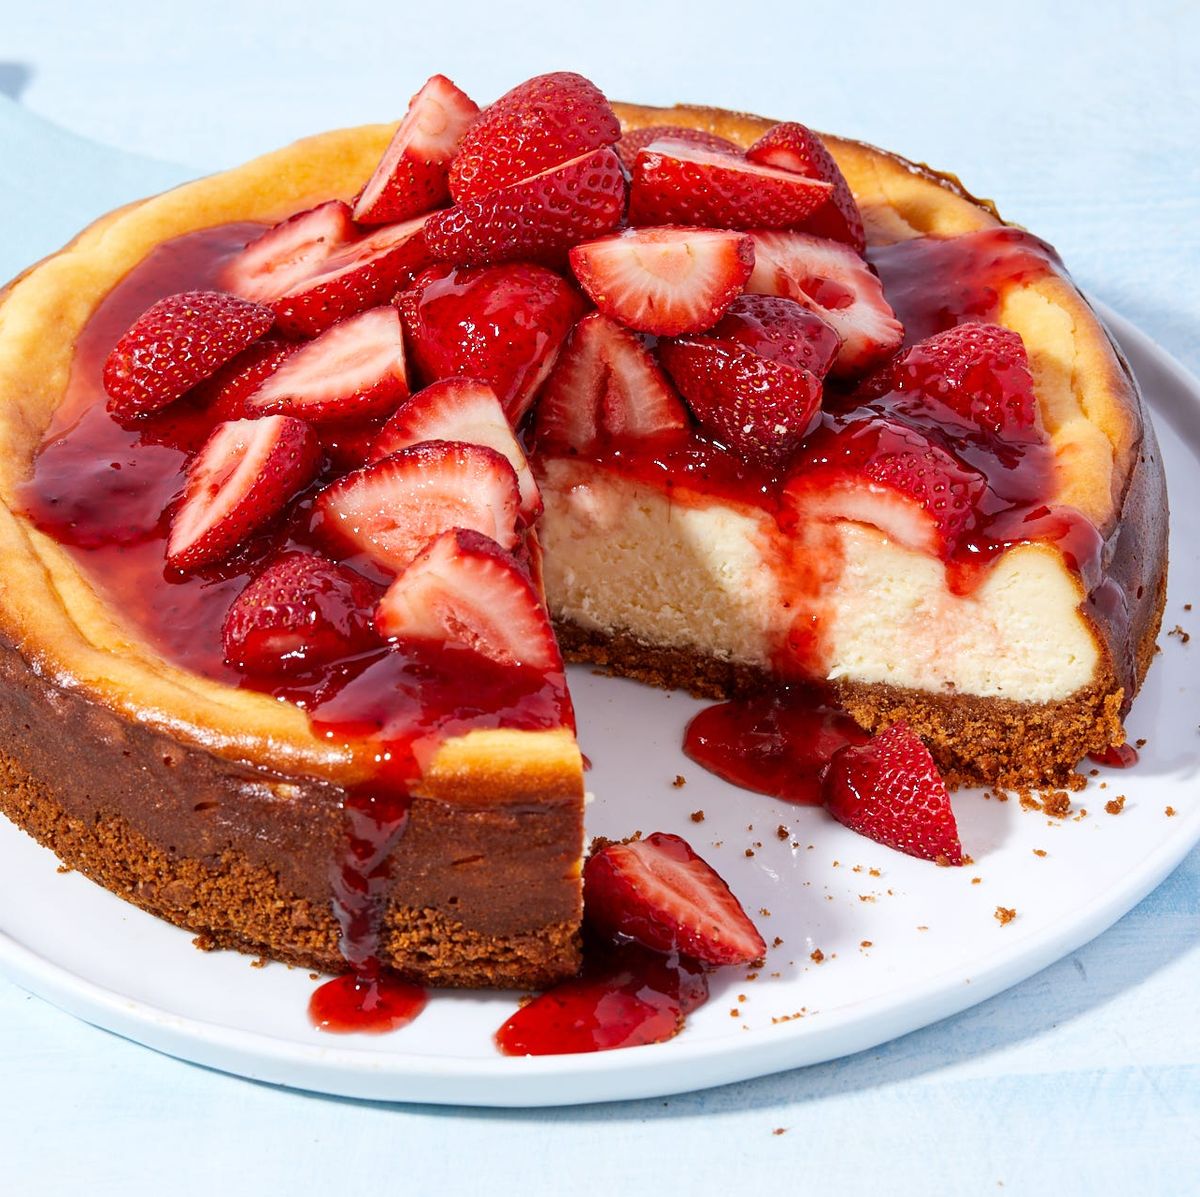 Best Strawberry Cheesecake Recipe - How to Make Strawberry Cheesecake